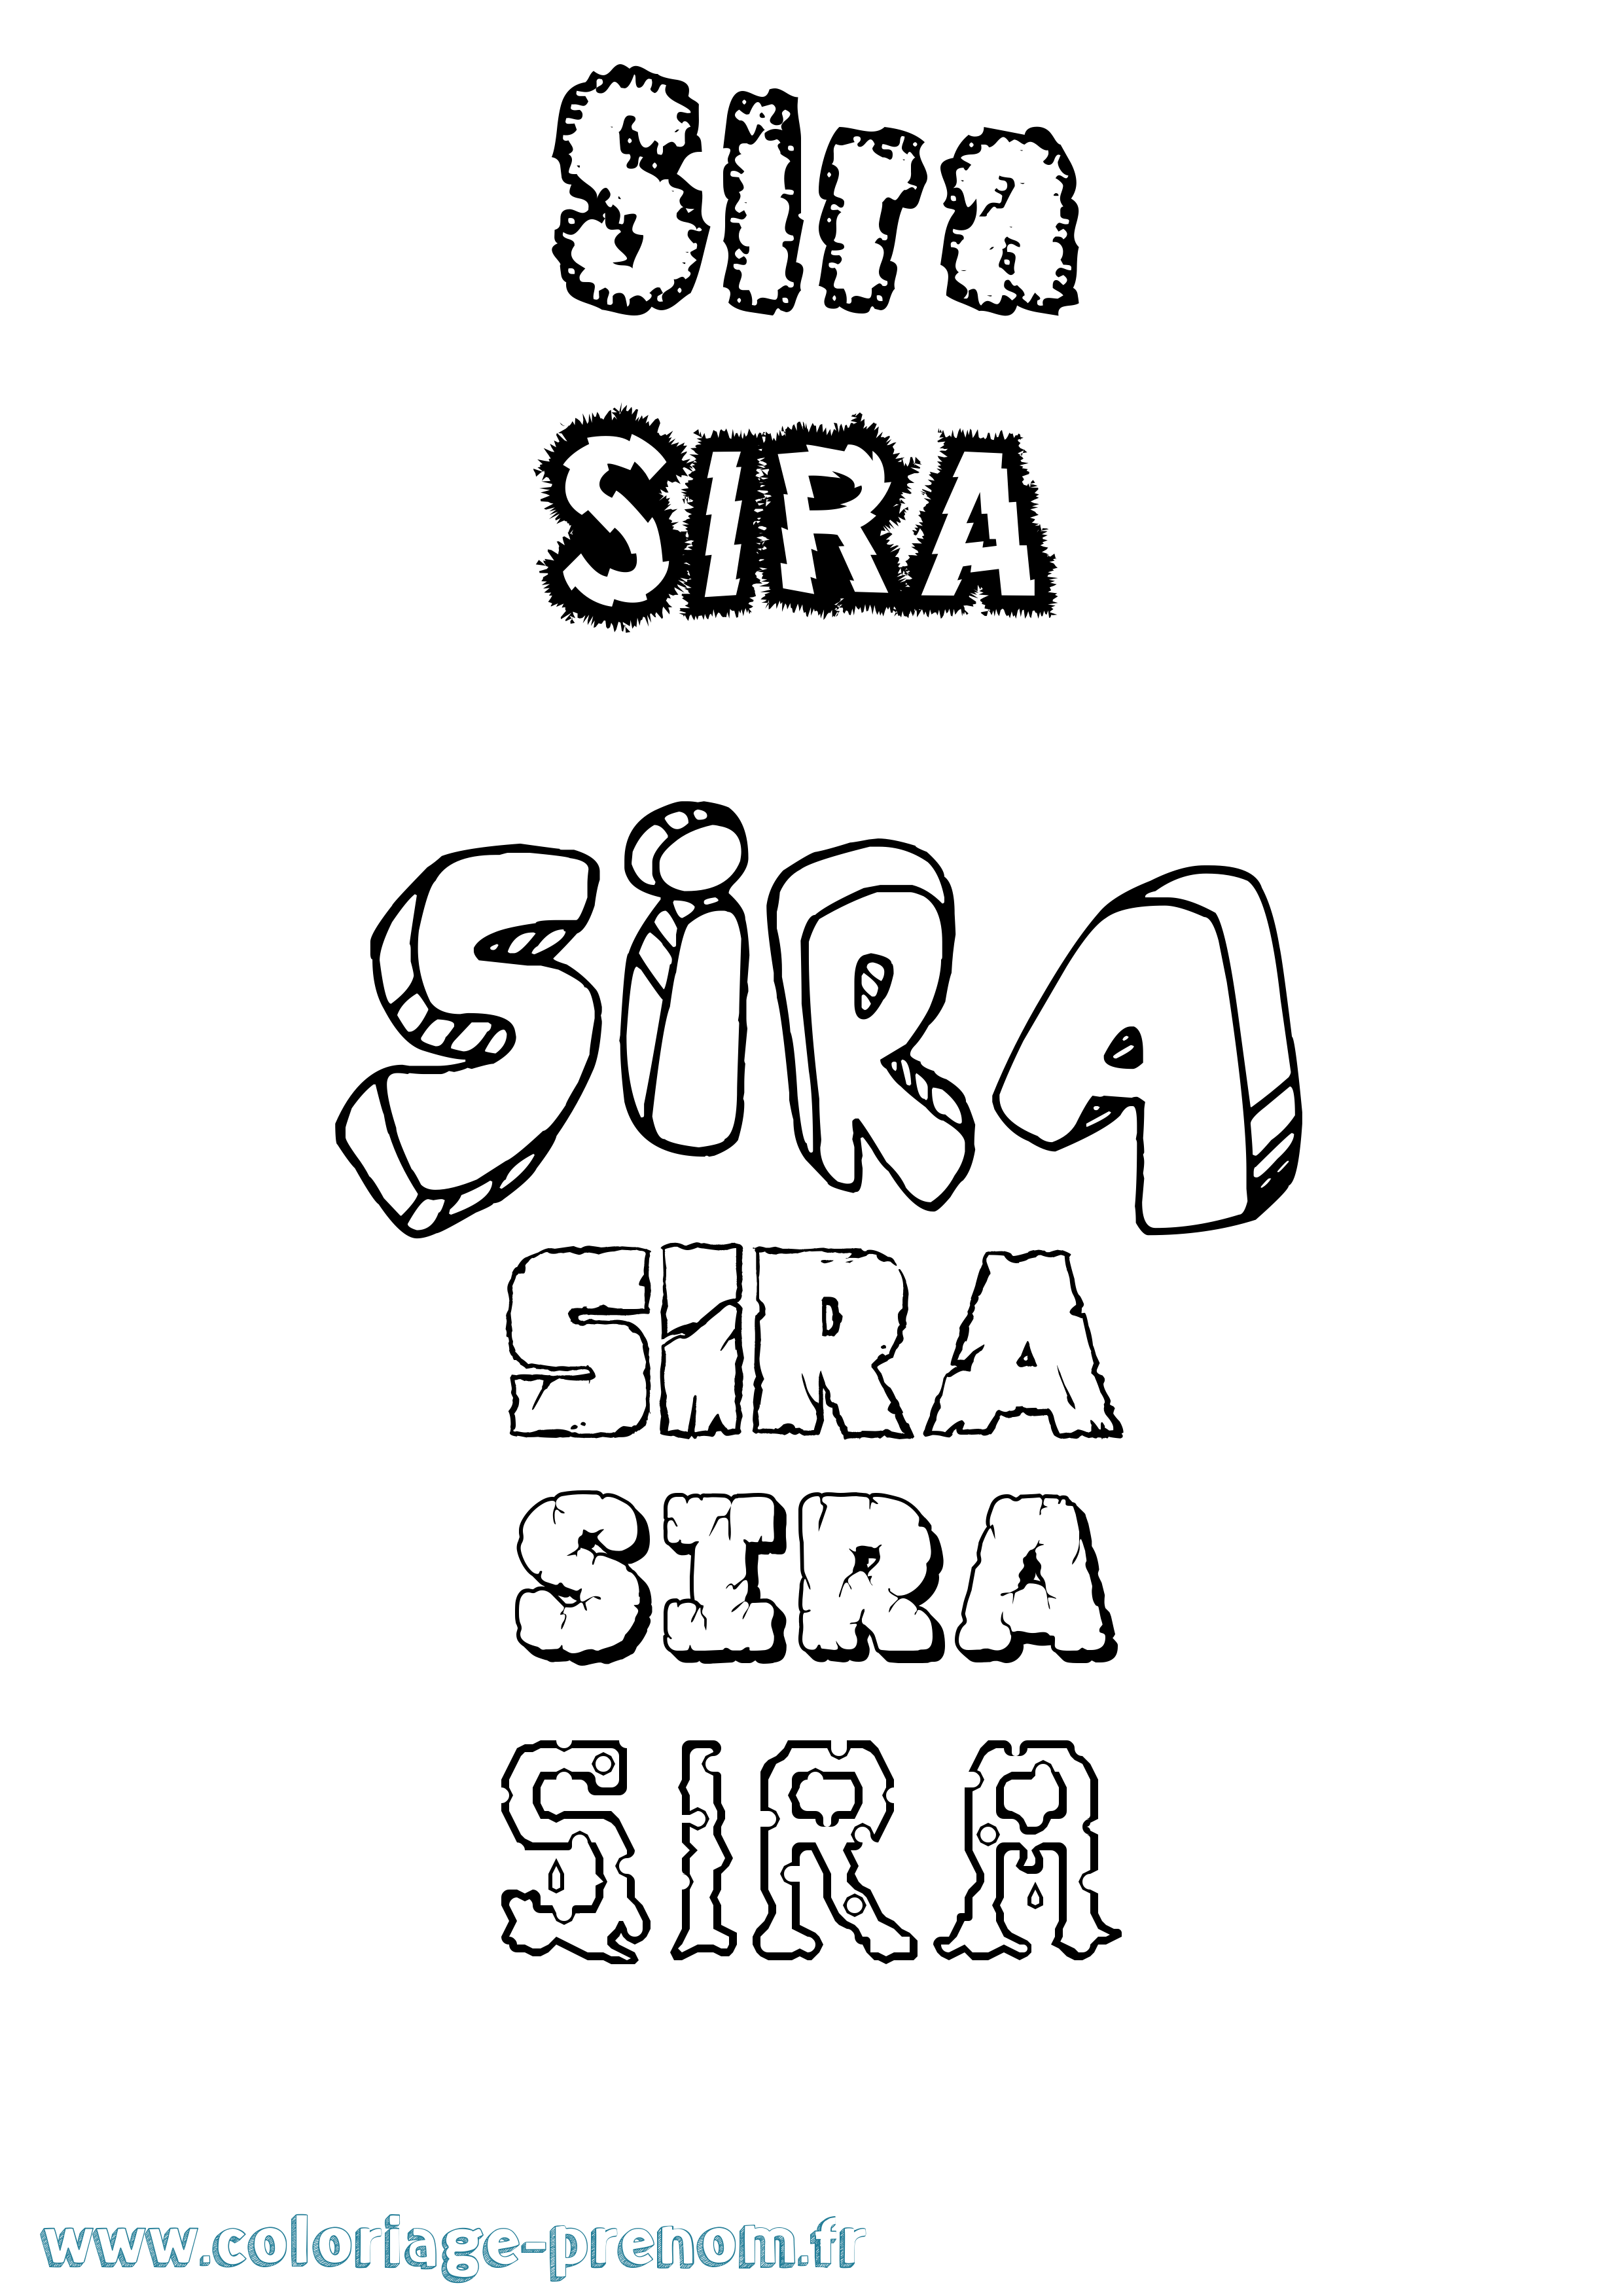 Coloriage prénom Sira